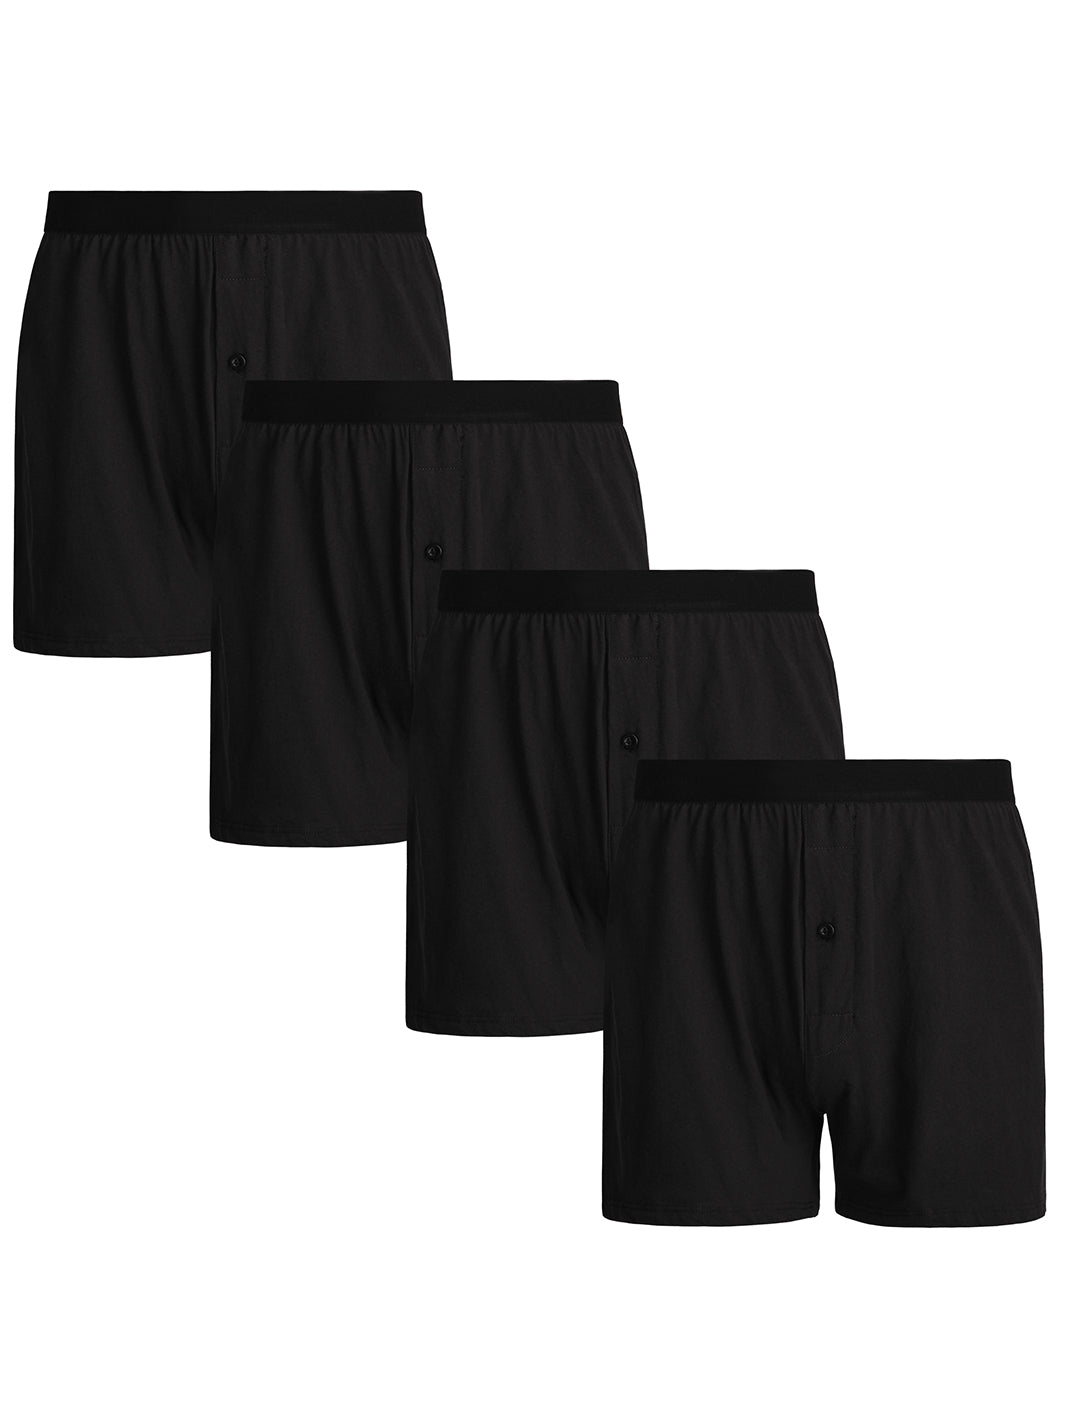 INNERSY Men's Micro Modal Boxer Briefs No Show Short Leg Trunks Underwear 3  Pack (L, Black) 